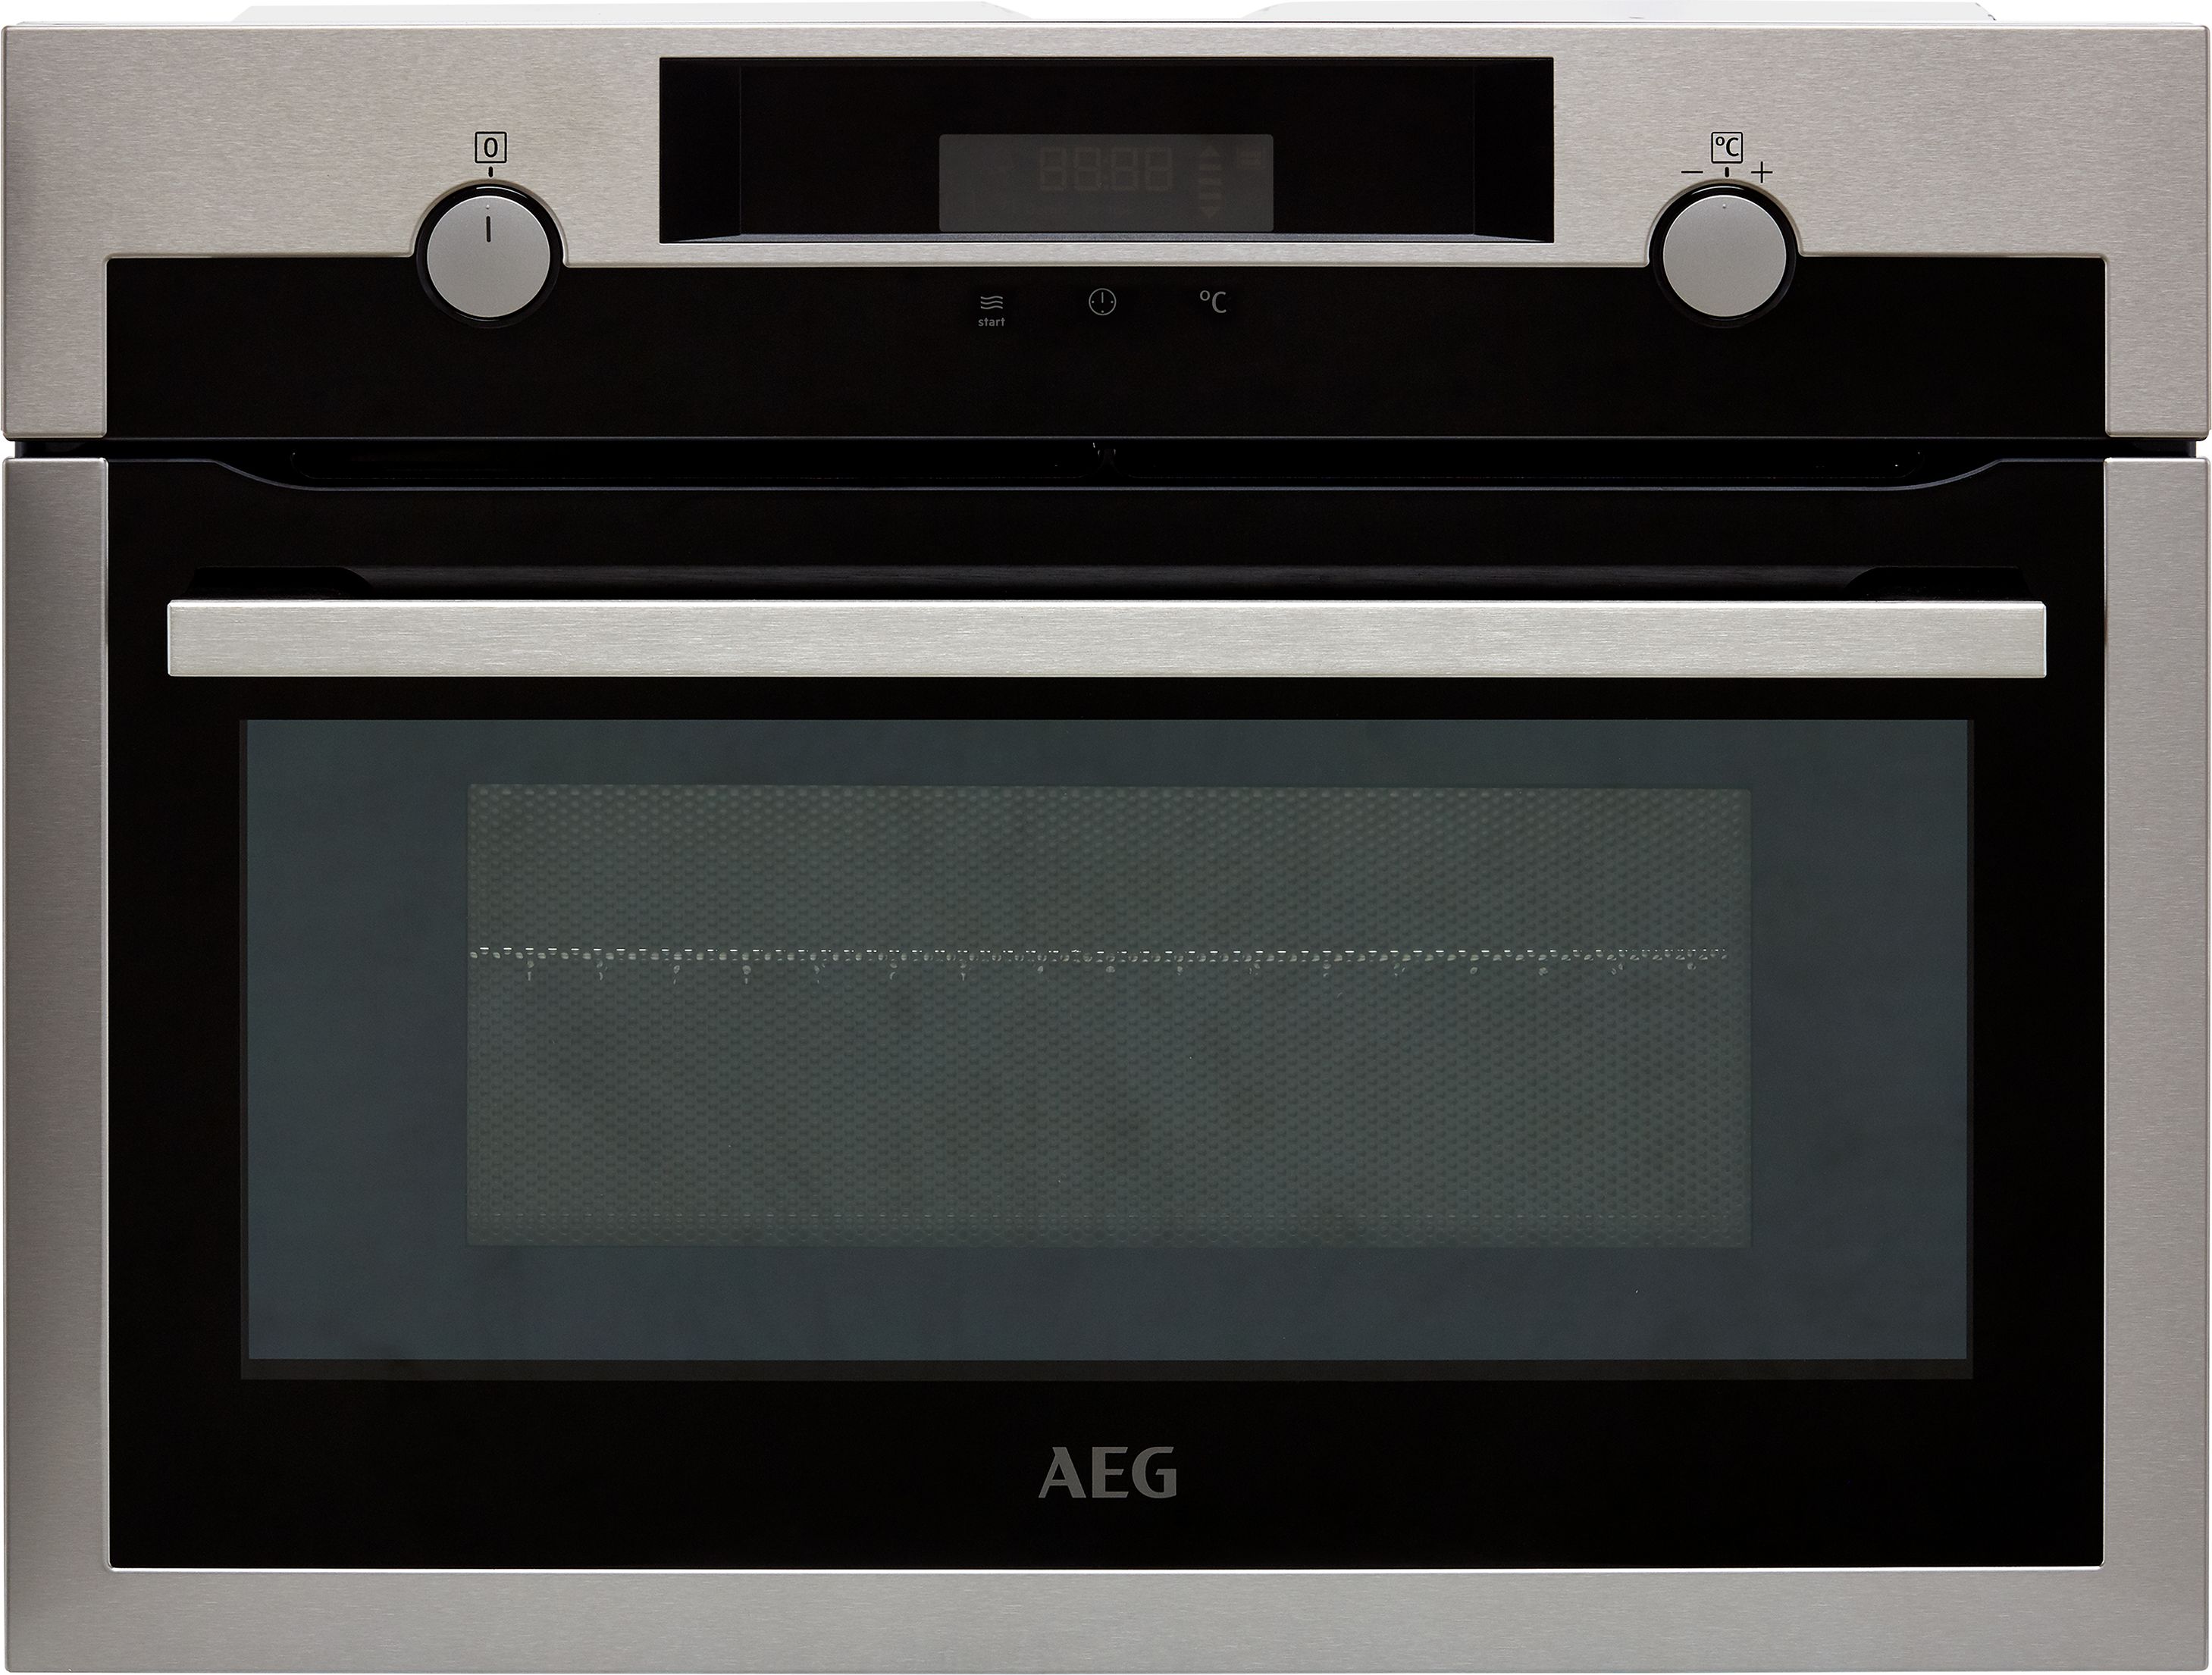 AEG AEG BPK355020M Single Oven Built In SteamBake Multifunction U45304 